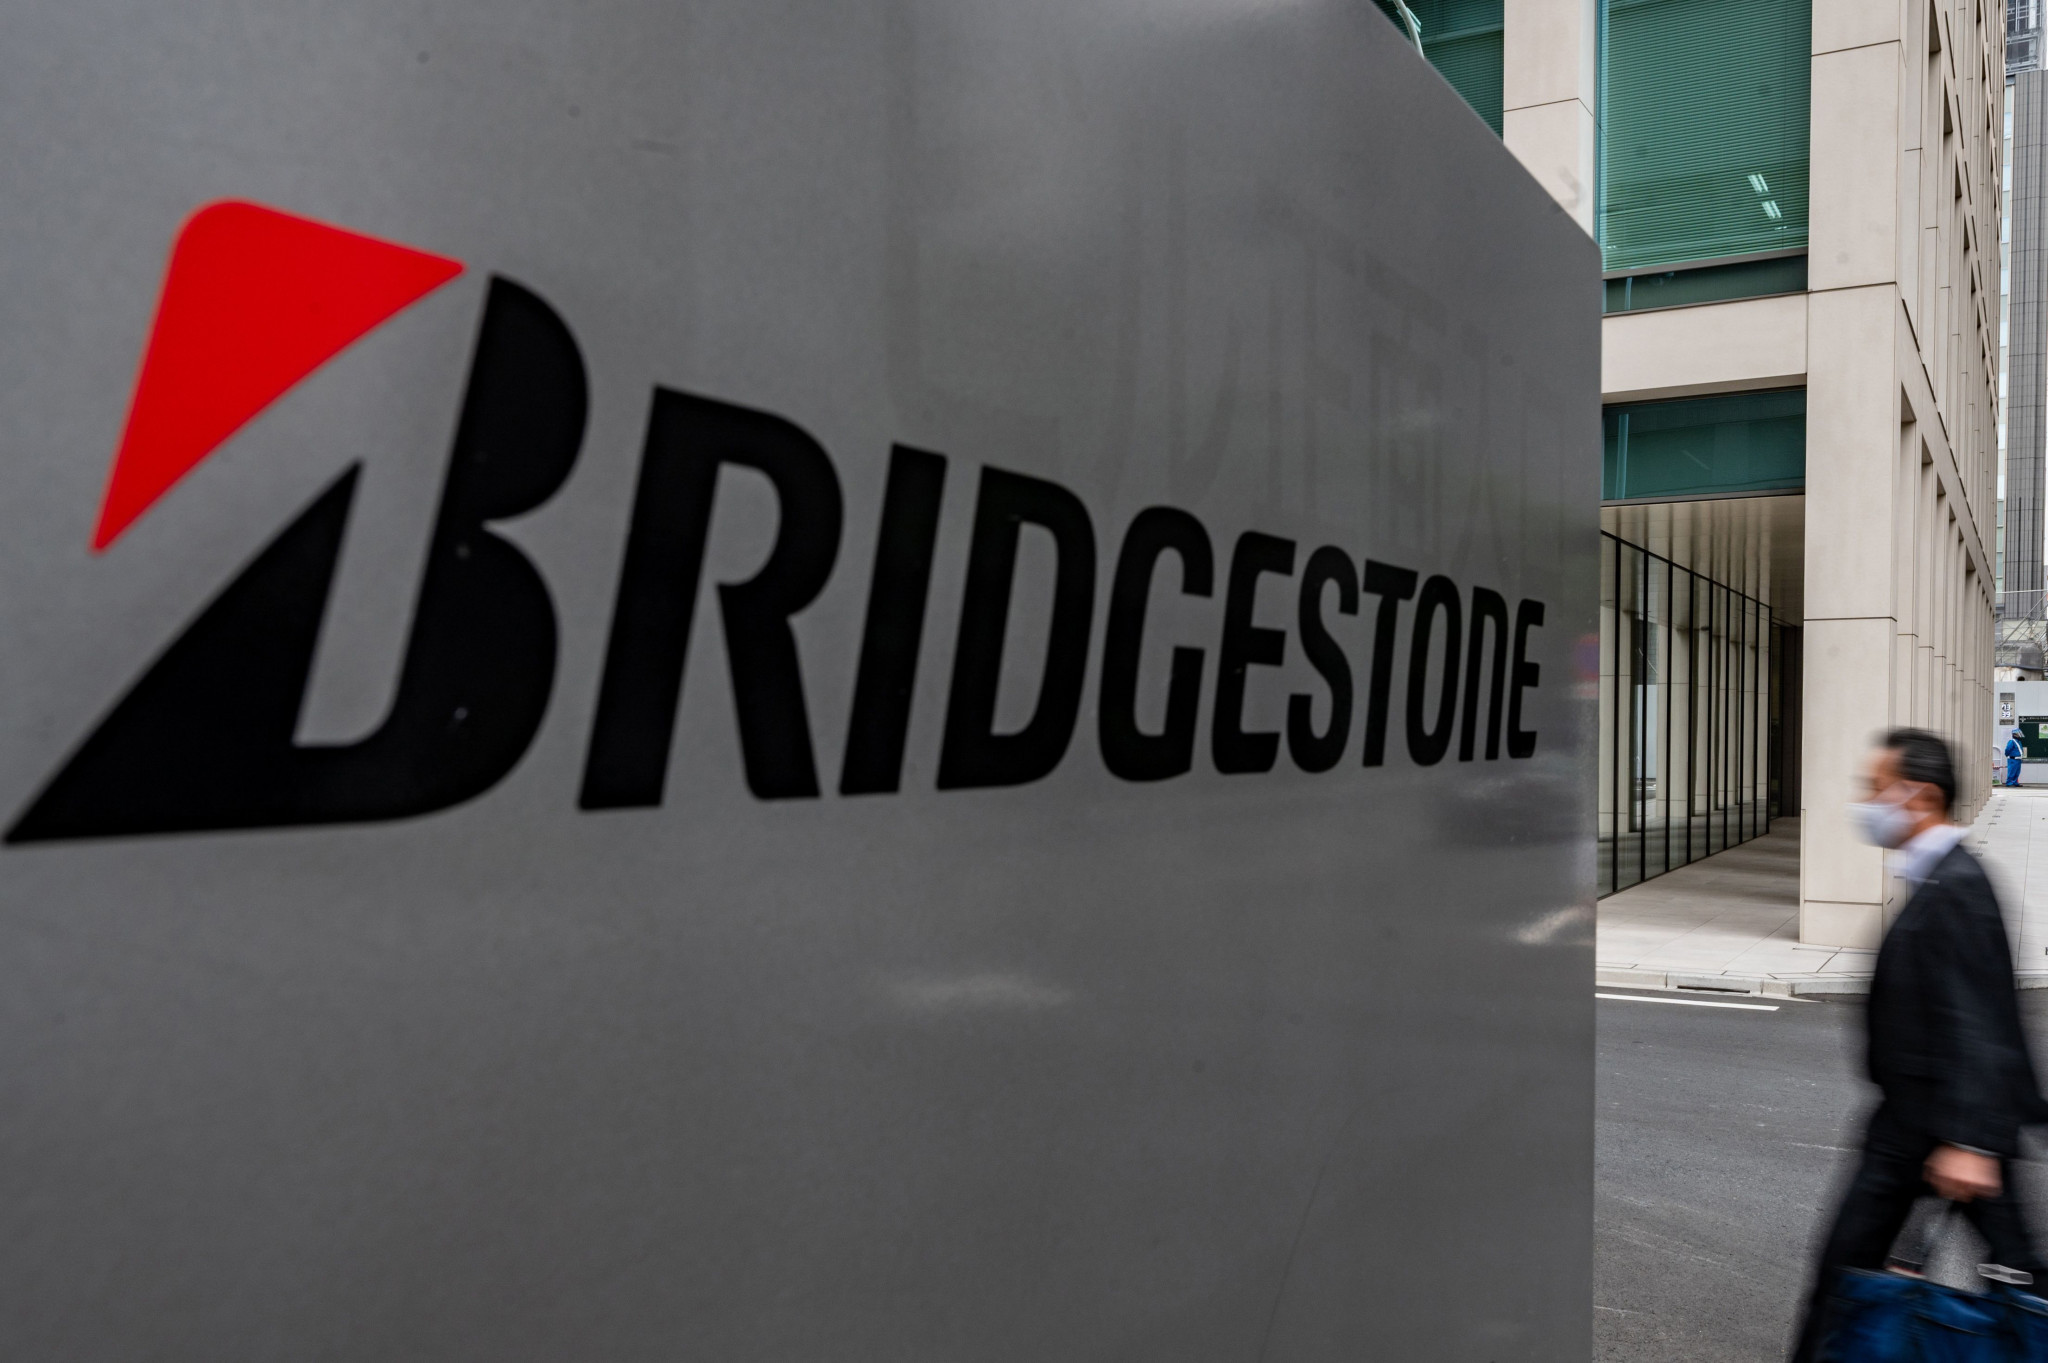 Bridgestone has recruited five ambassadors for Paris 2024 ©Getty Images